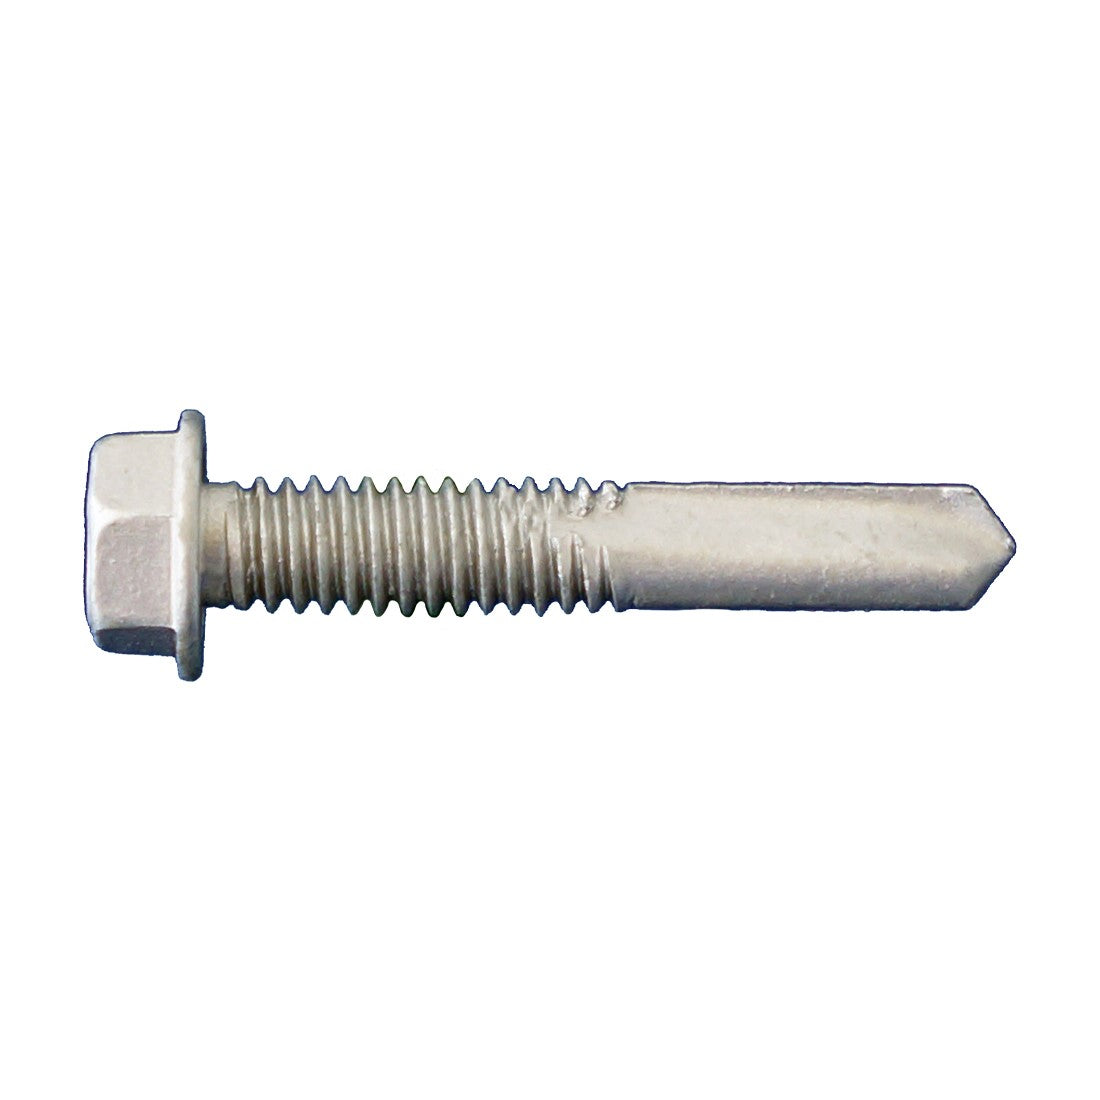 14 inch20 x 3 inch SelfDrilling Metal Screw w#5 Point Hex Head DaggerGuard Coating Pkg 1000